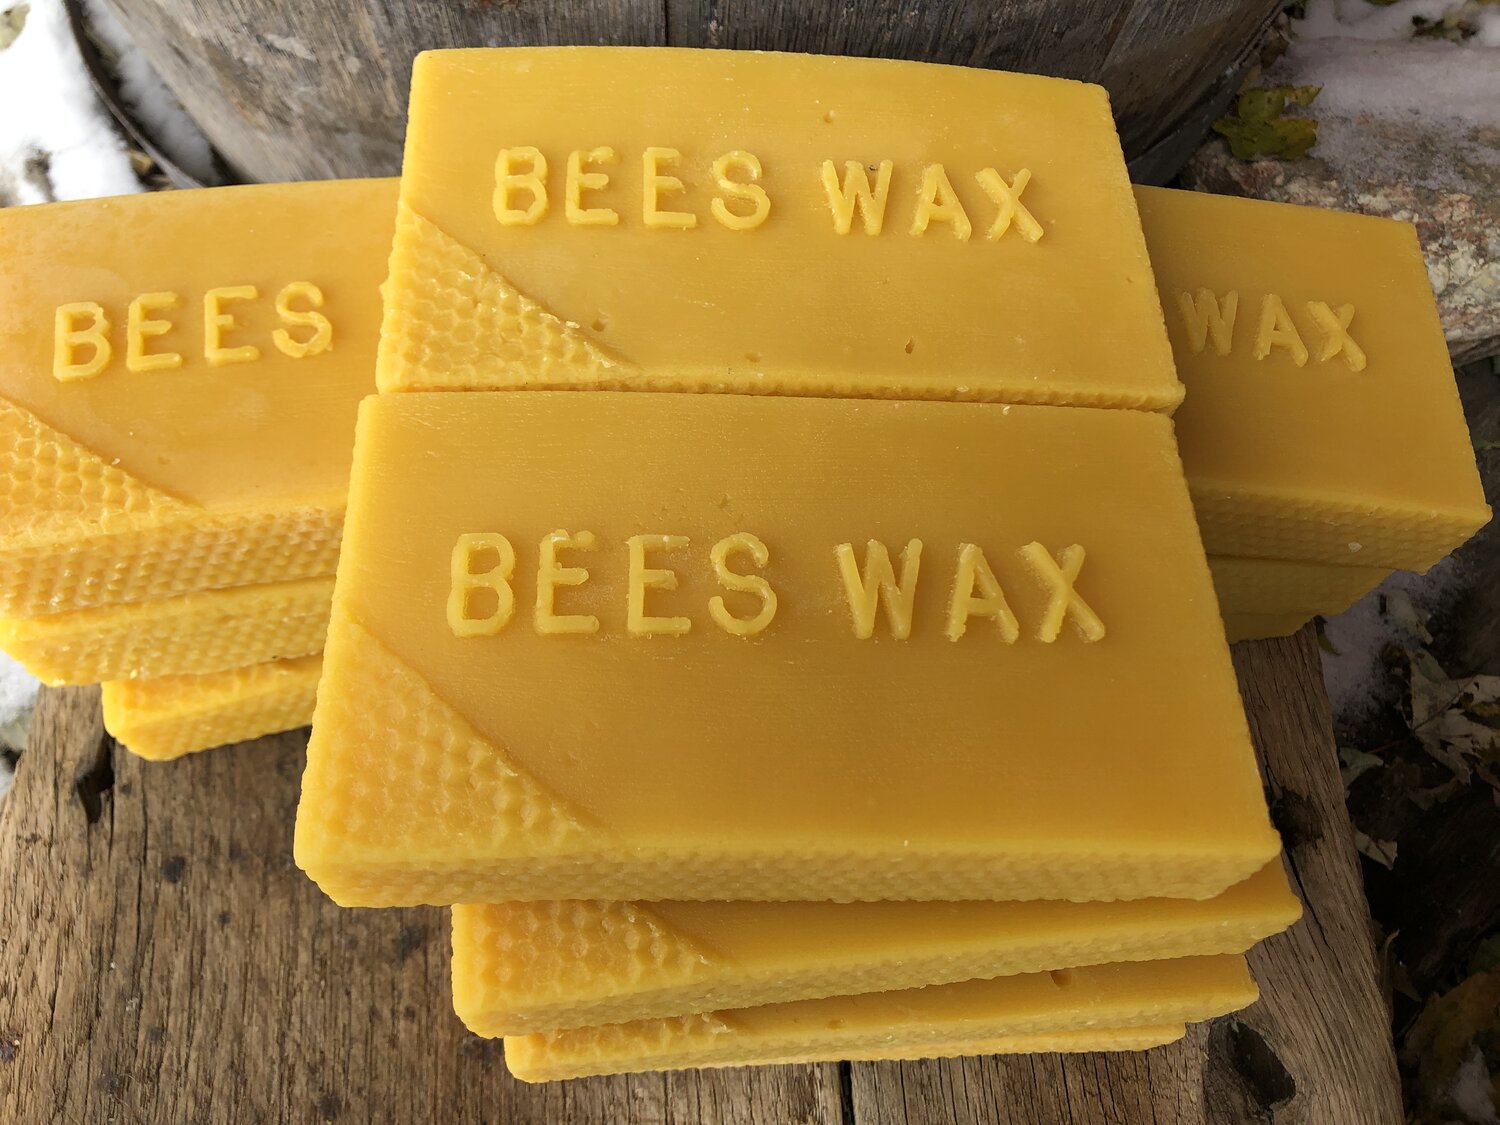 Bees Wax Manufacturers Worldwide